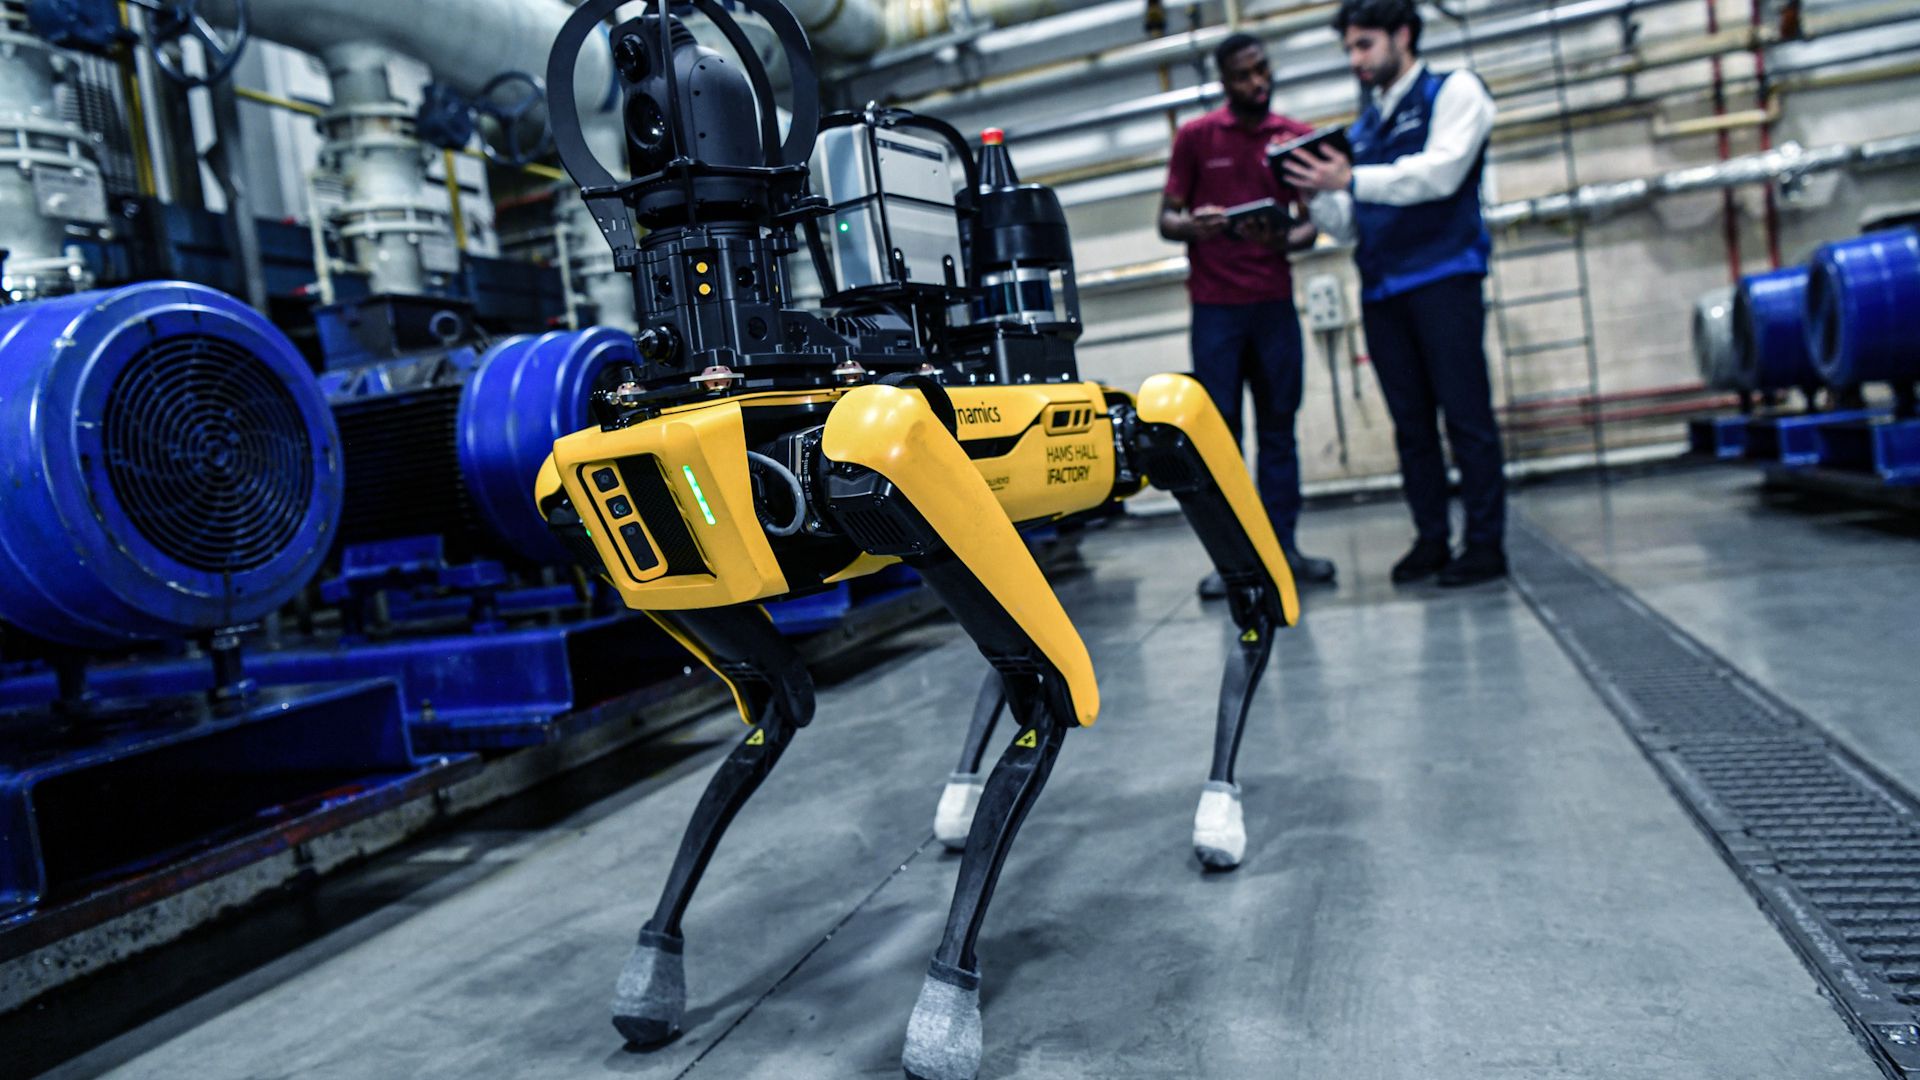 BMW “adopts” robot dog to collect data at UK factory